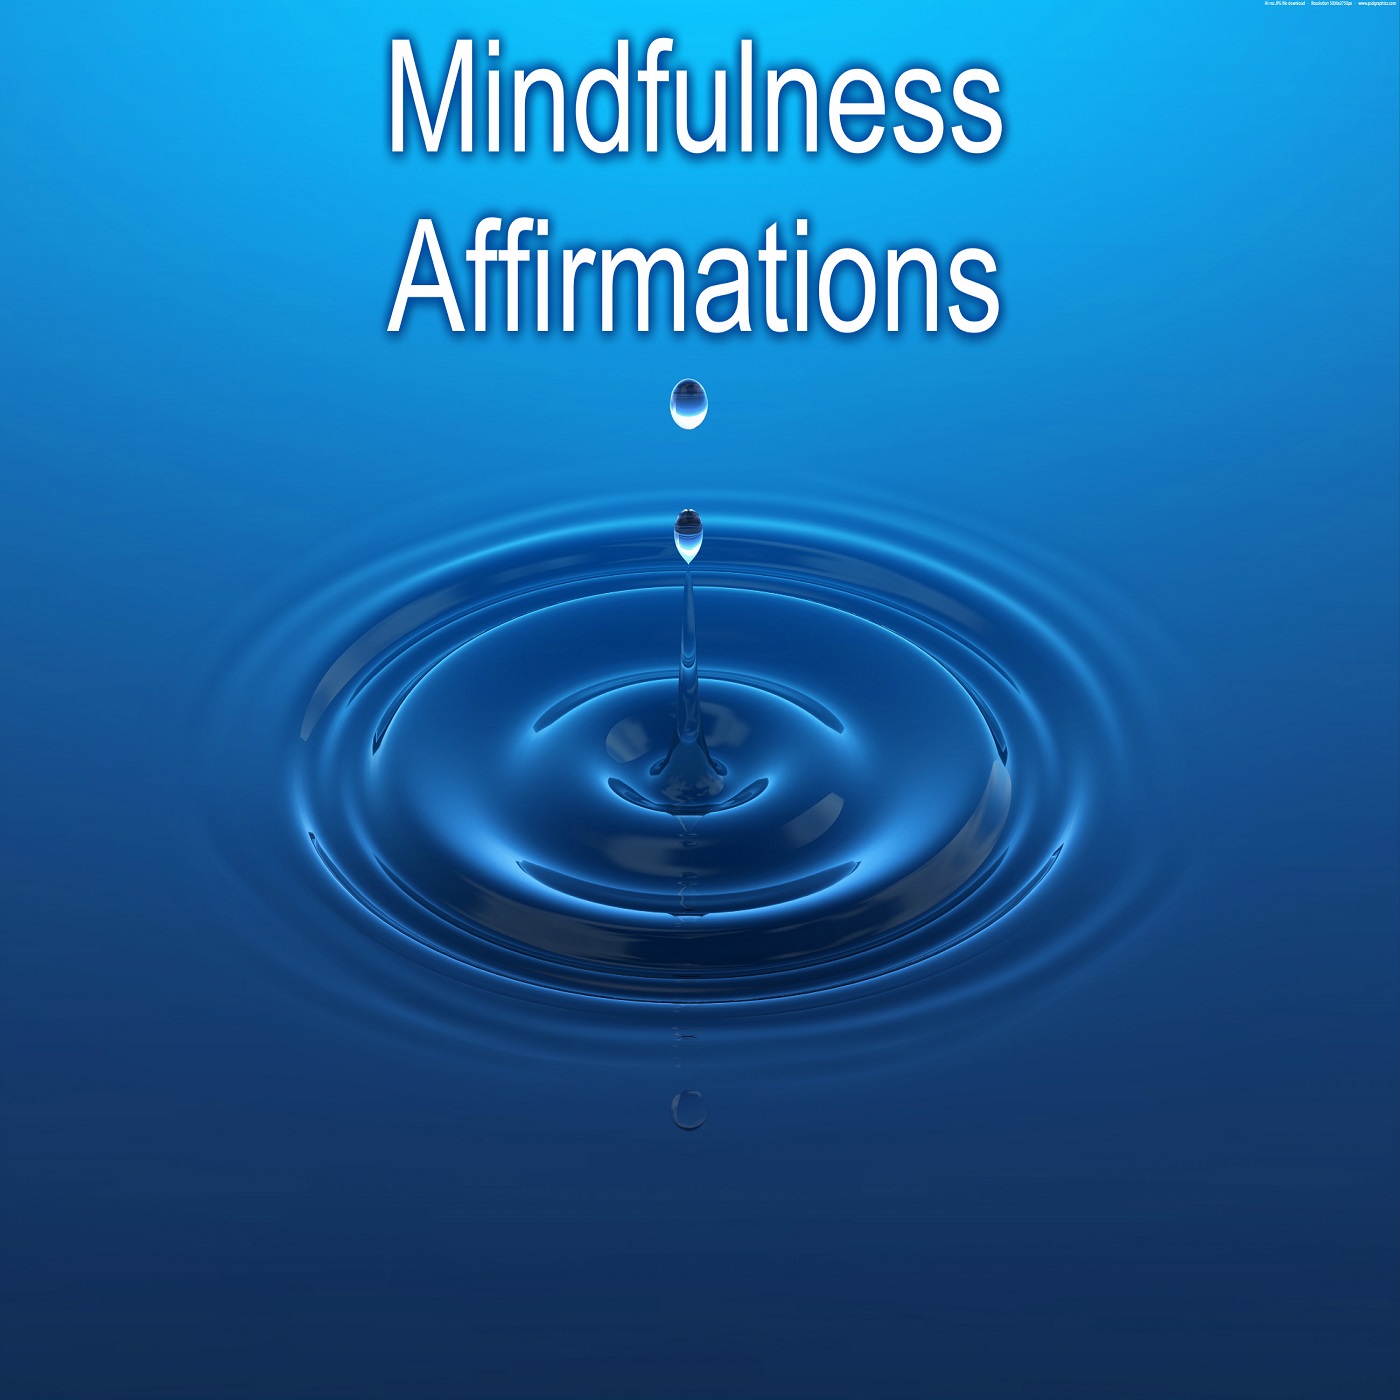 Mindulness Affirmations